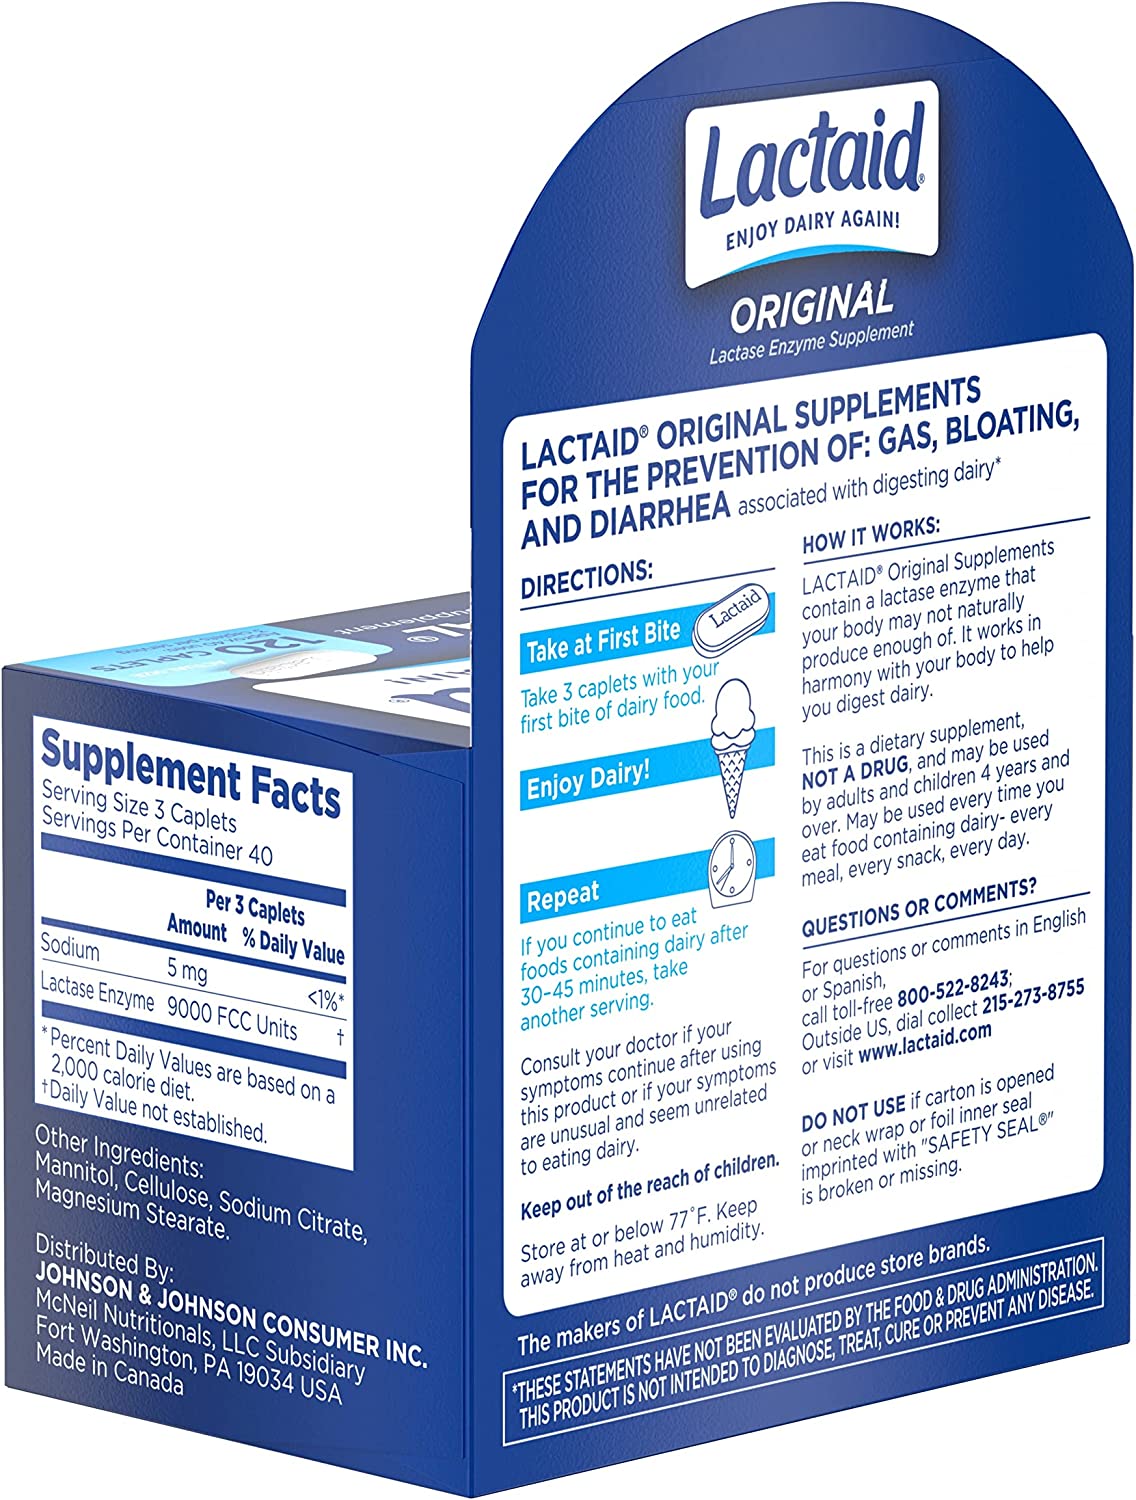 Lactaid Original Strength Lactose Intolerance Relief Caplets